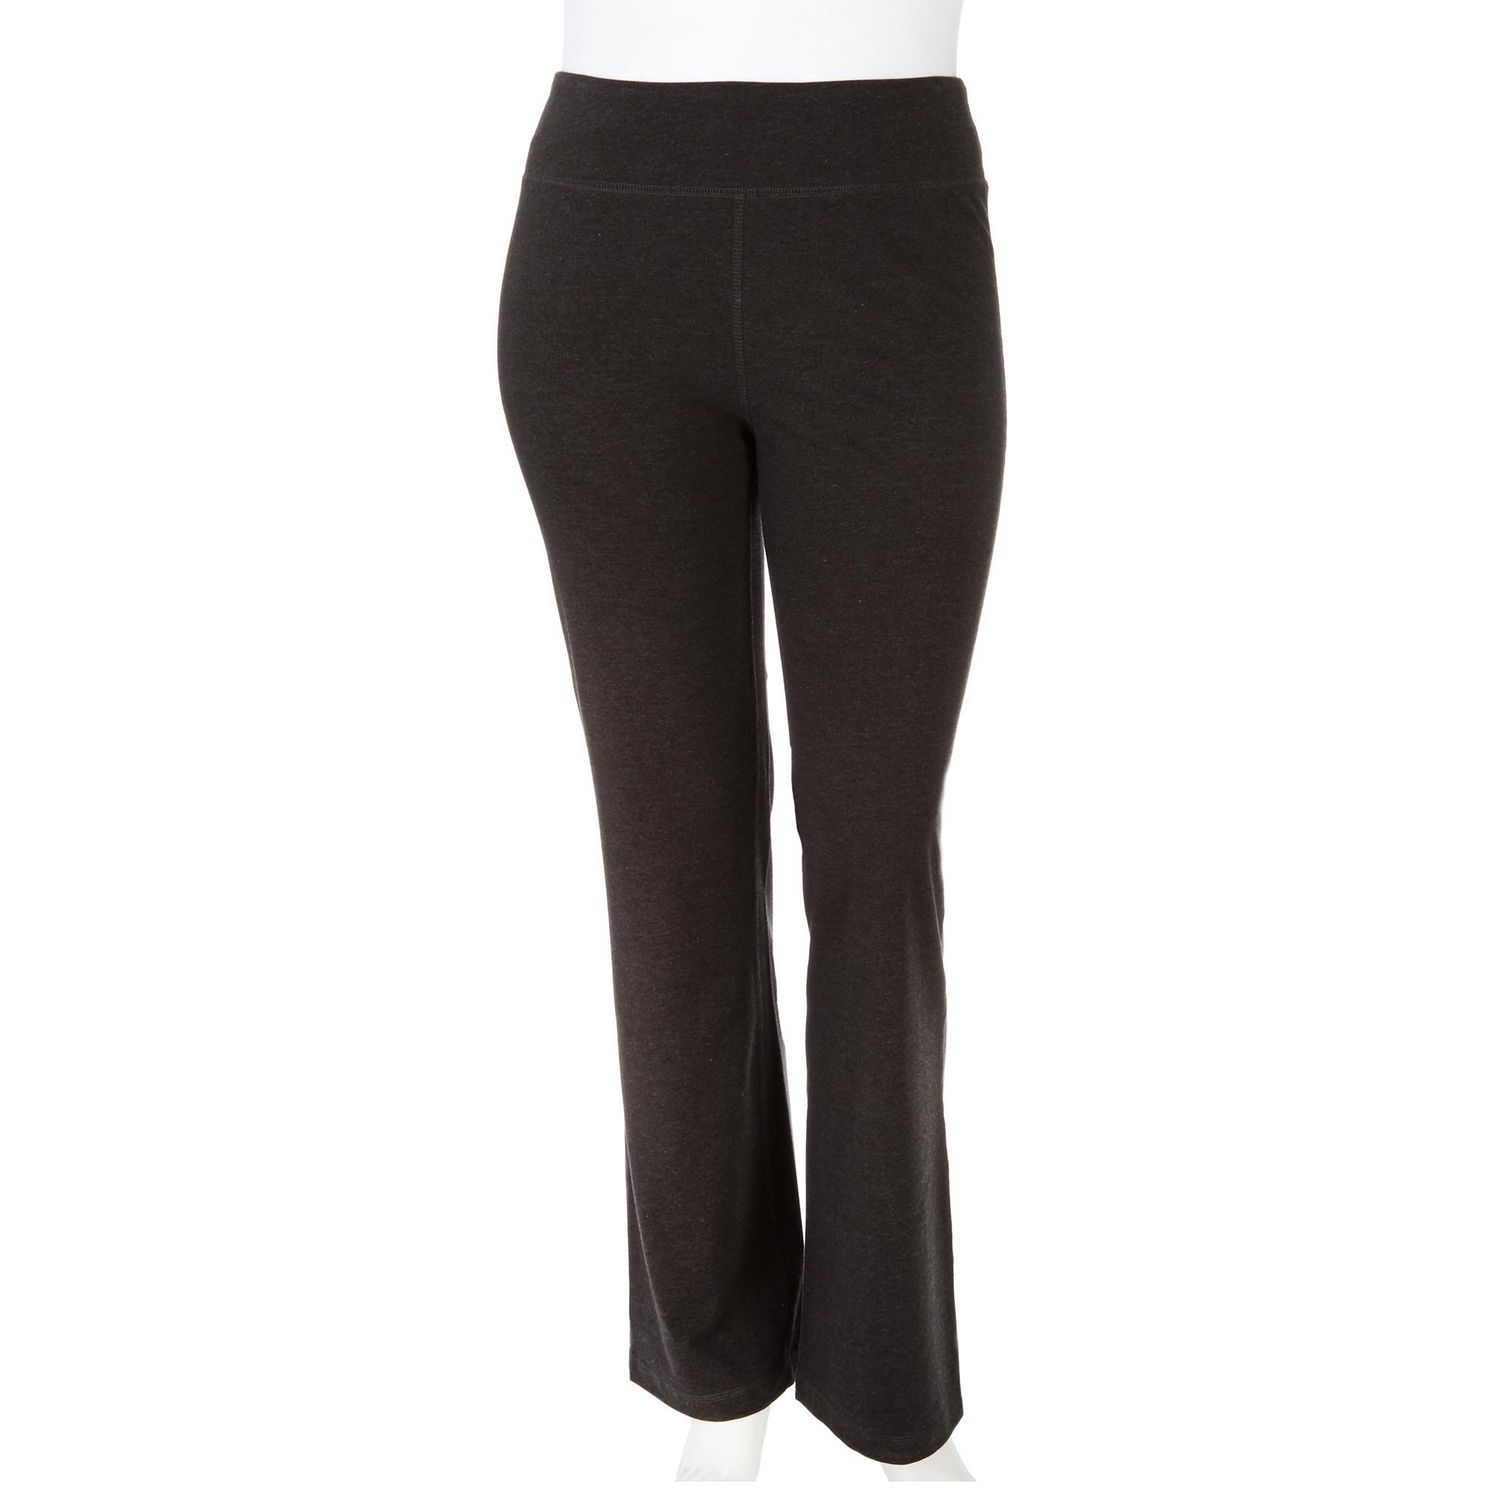 Buy YOHOYOHA Plus Size Leggings High Waist Athletic Workout Yoga Pants Pockets  Women's Tummy Control Best Thick Long XL 2X 3X 4X Black at